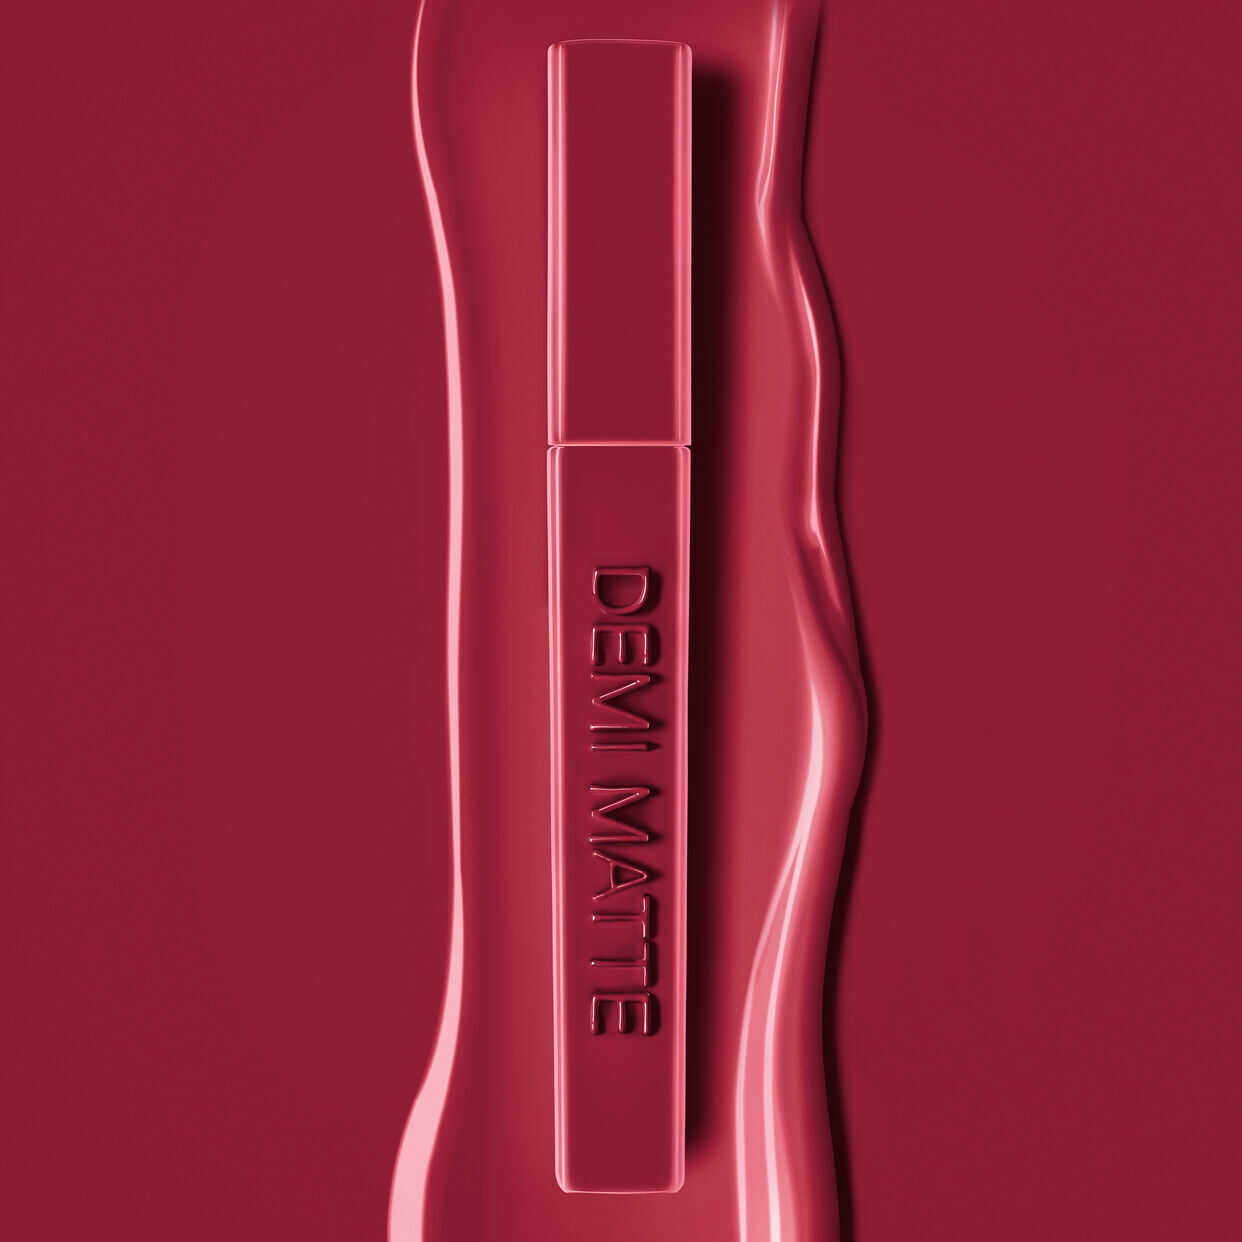 Huda Beauty | Demi Matte Cream Liquid Lipstick | Lady Boss